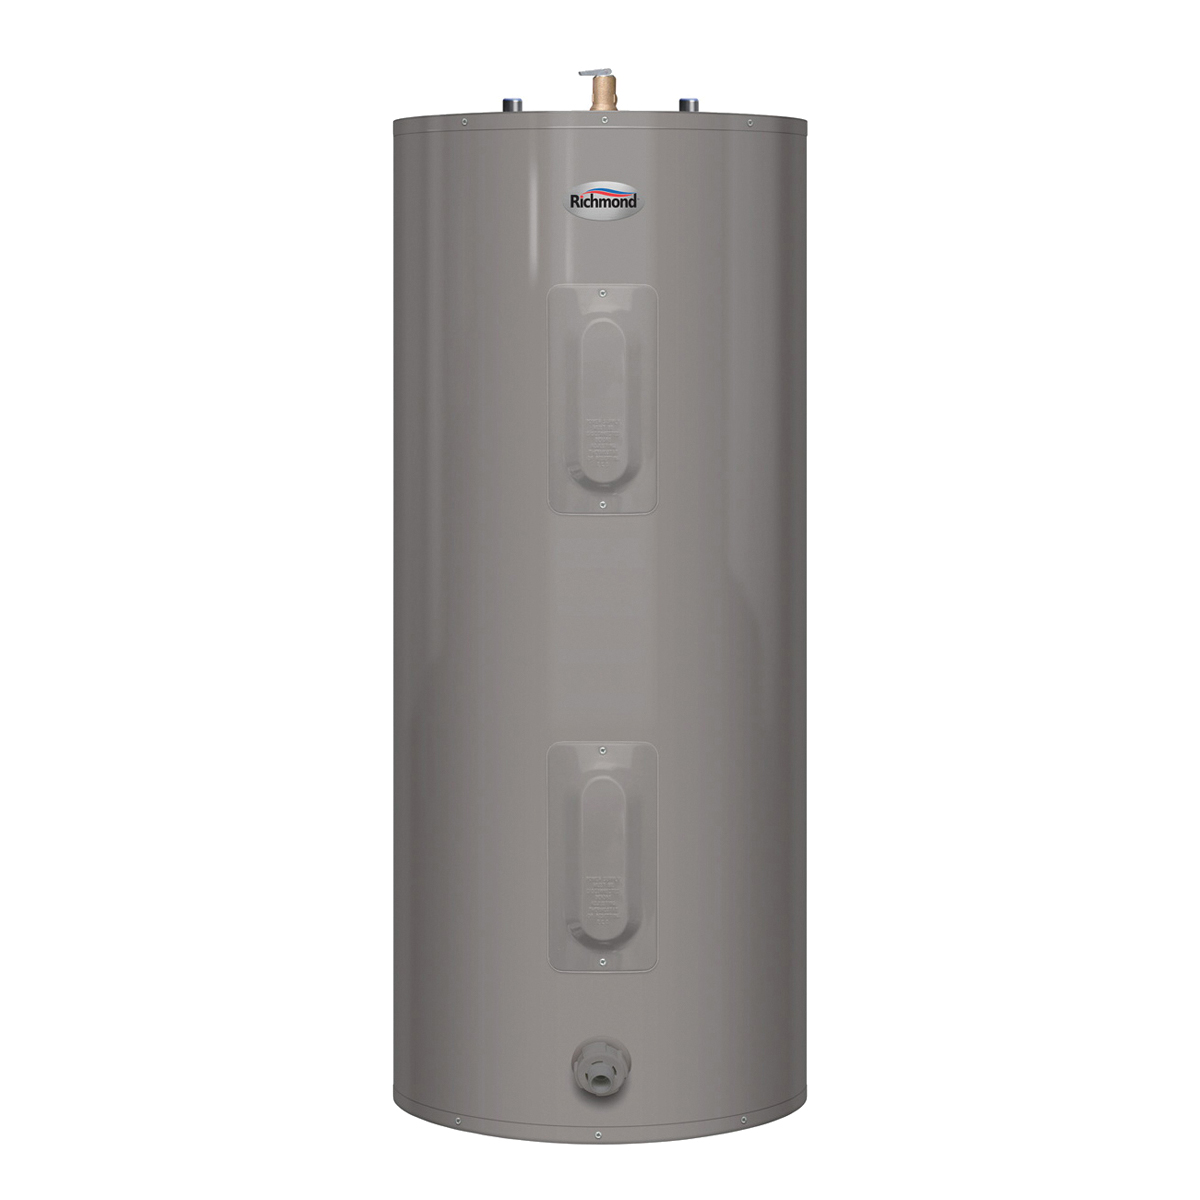 Essential Series 6EM50-D Electric Water Heater, 240 V, 4500 W, 50 gal Tank, 0.93 Energy Efficiency